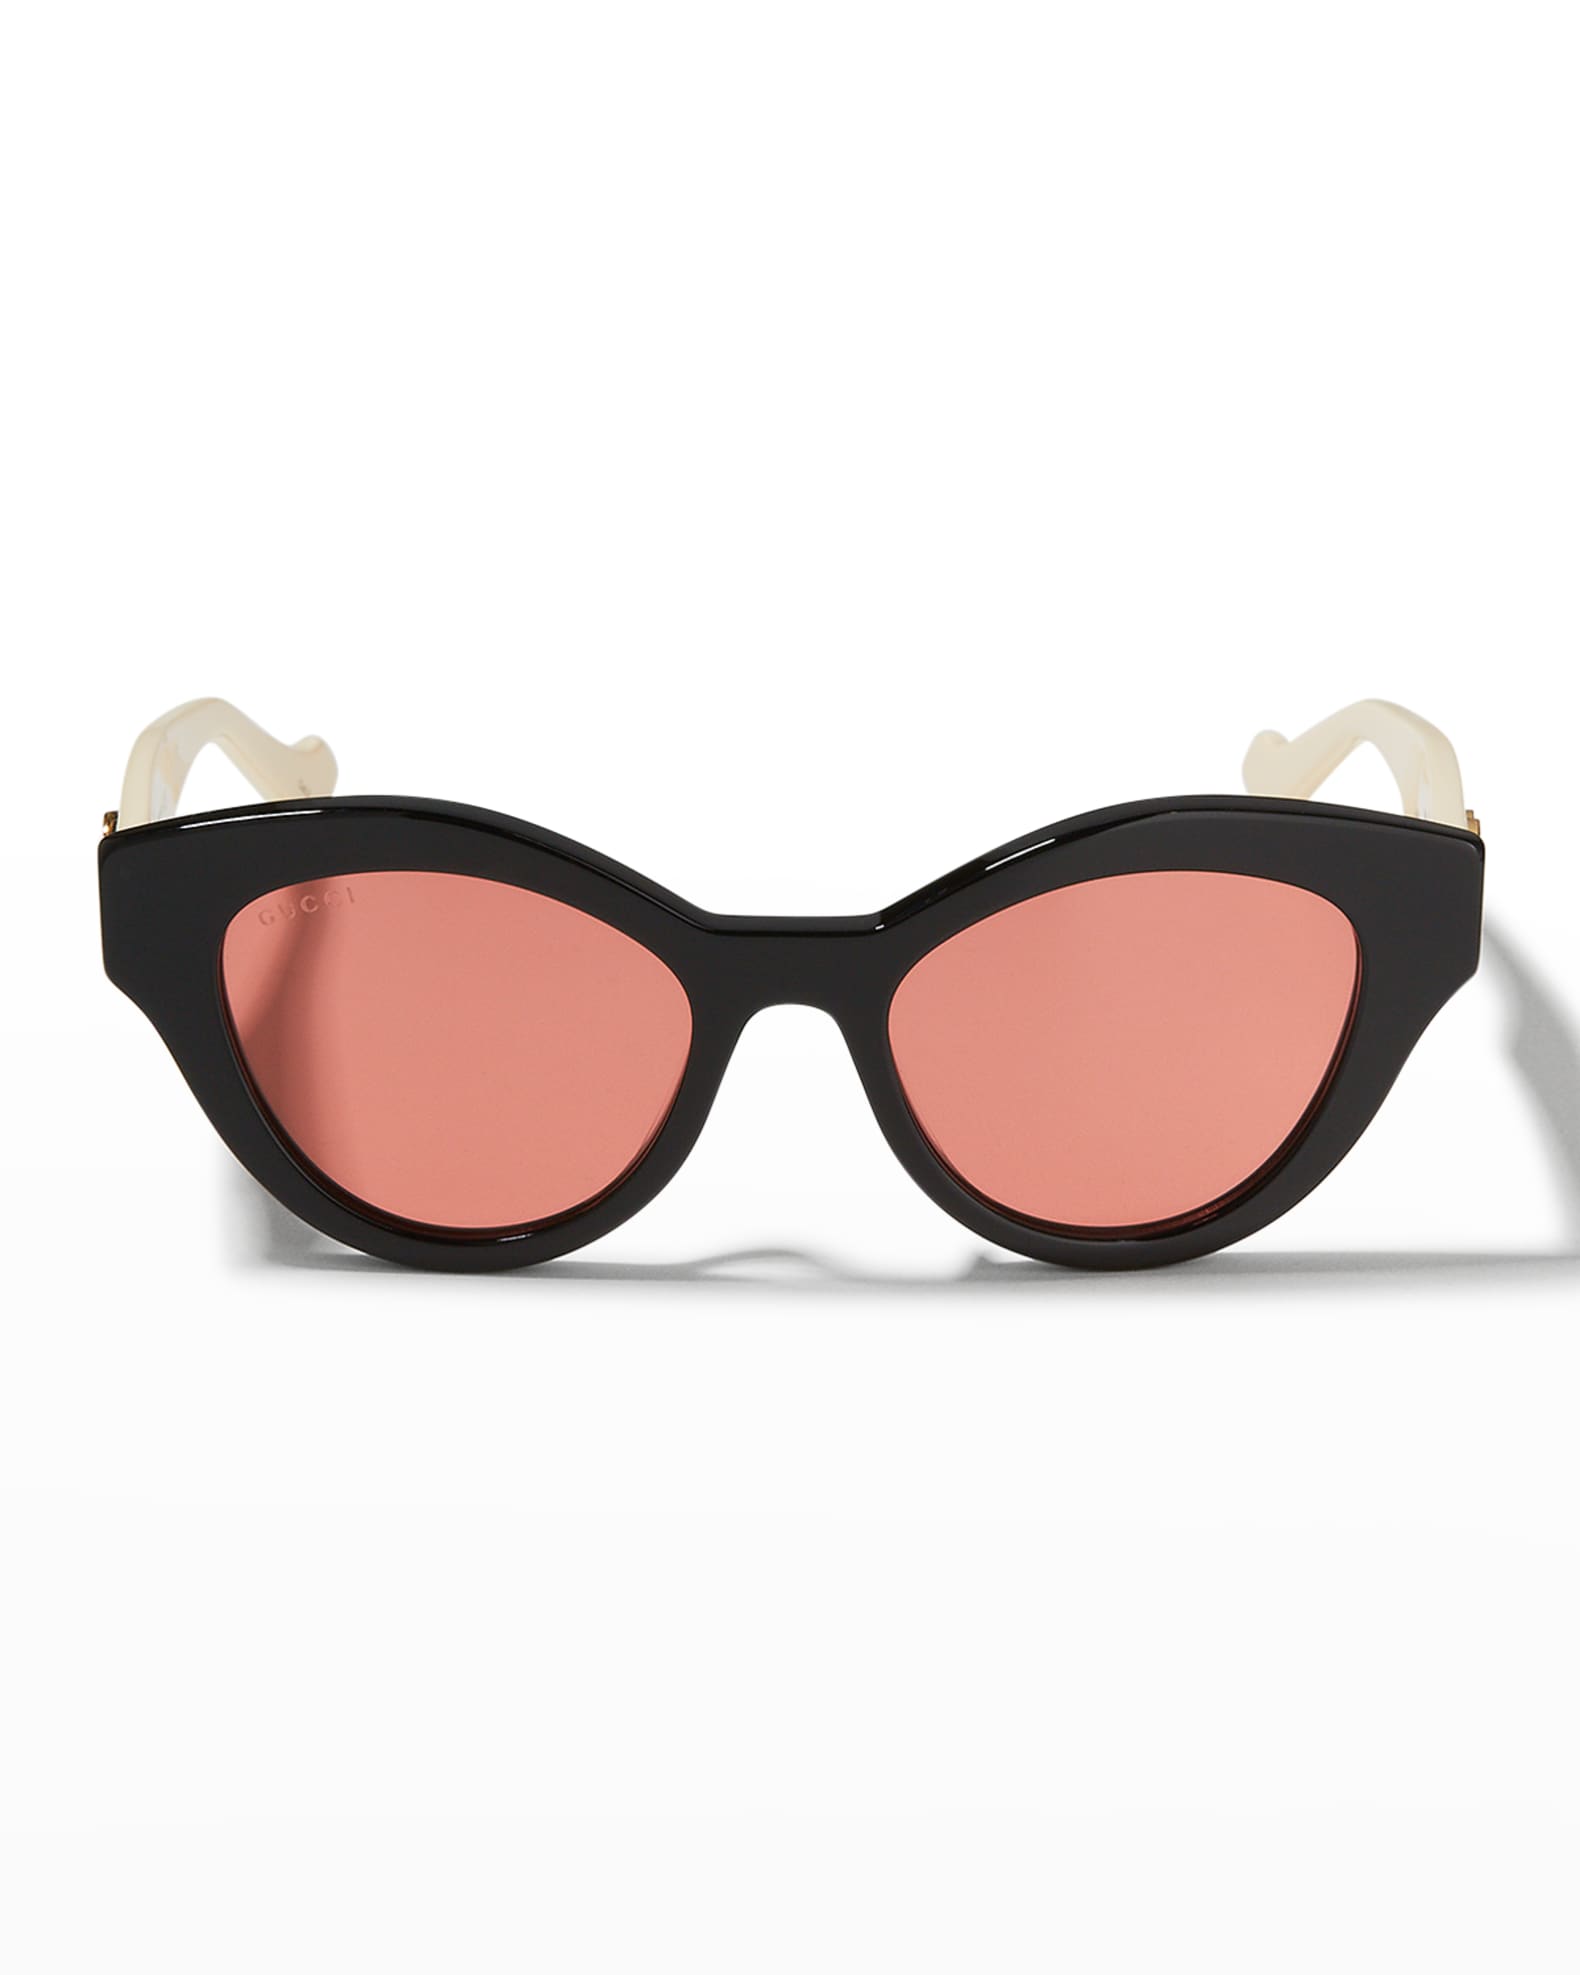 Gucci Interlocking G Acetate Cat Eye Sunglasses Neiman Marcus